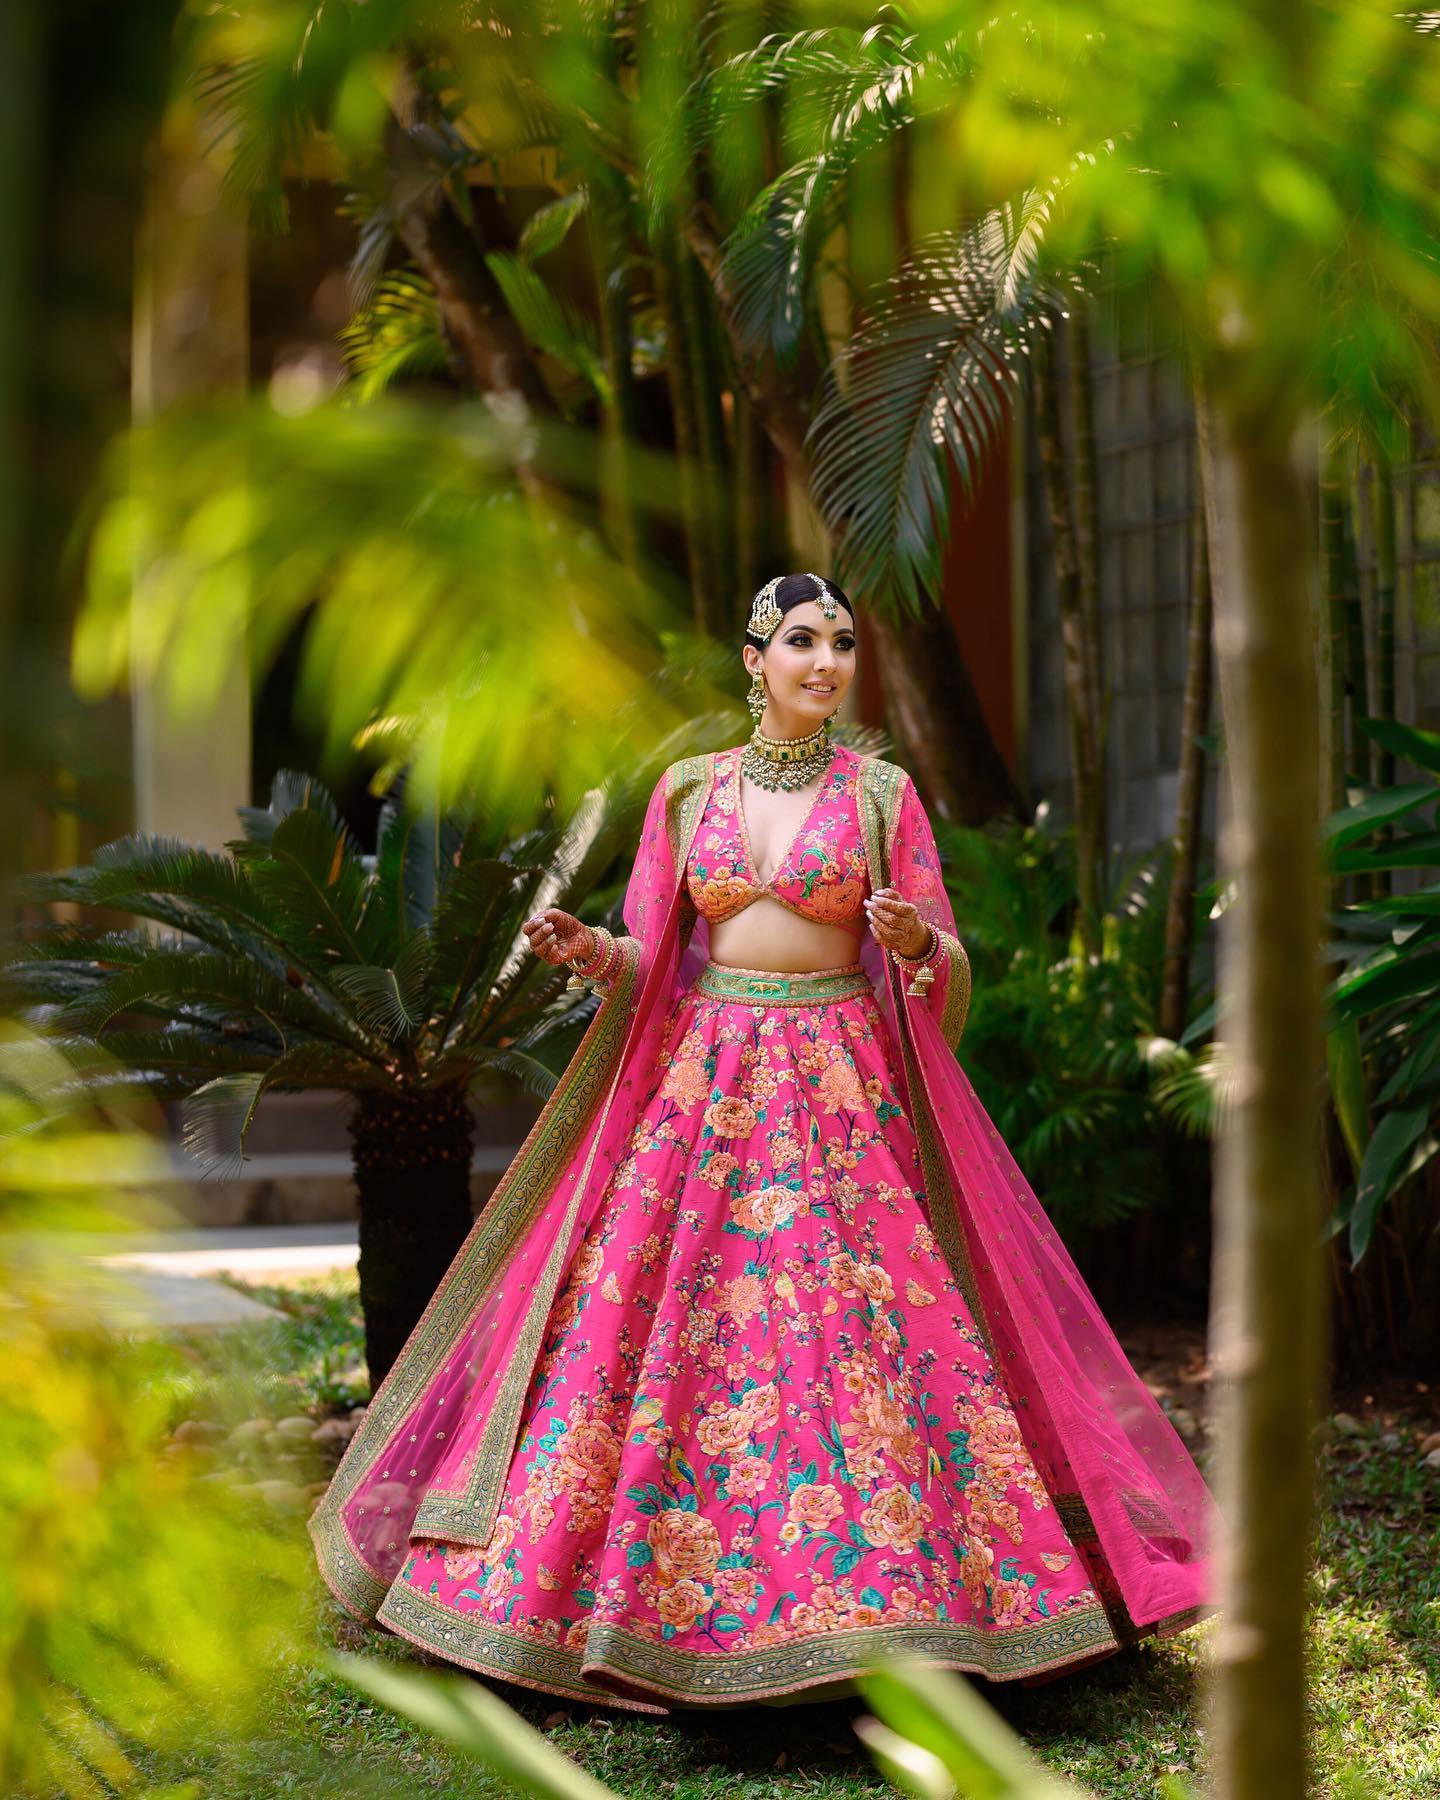 Sabyasachi Bride Stunned In A Floral Lehenga Adorned With 'Phulkari' Design  And 'Zardosi' Border